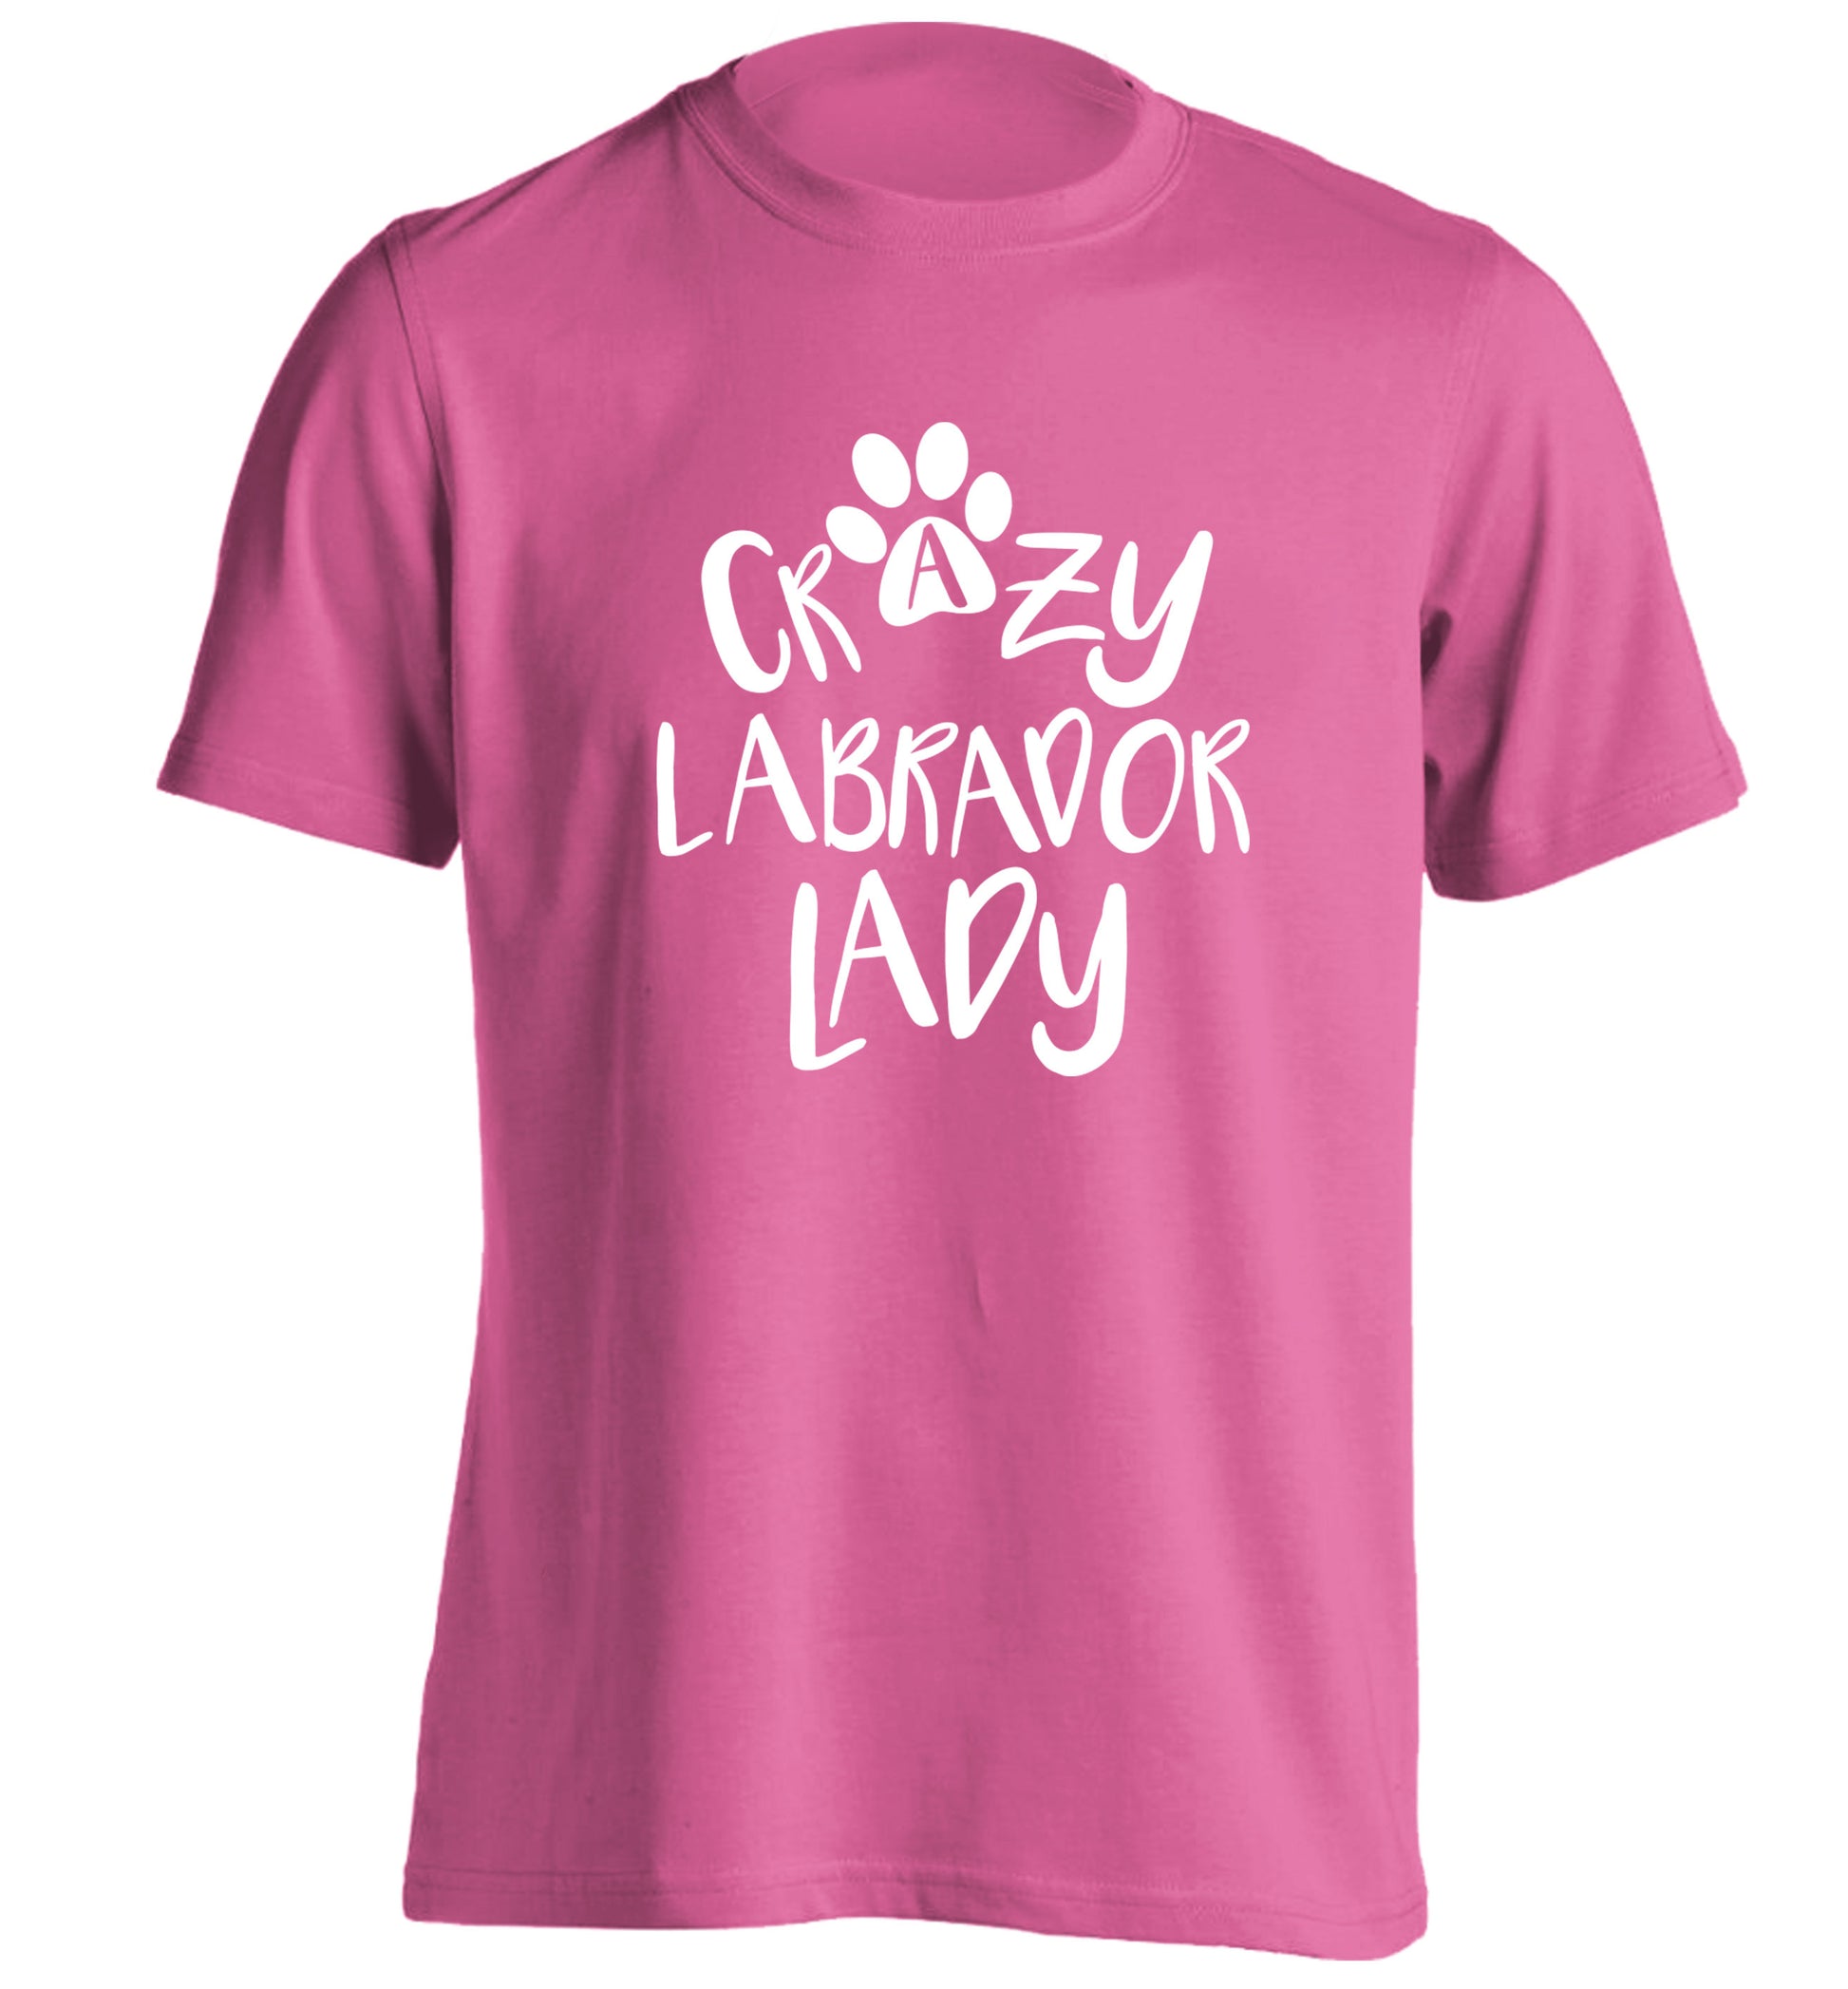 Crazy labrador lady adults unisex pink Tshirt 2XL